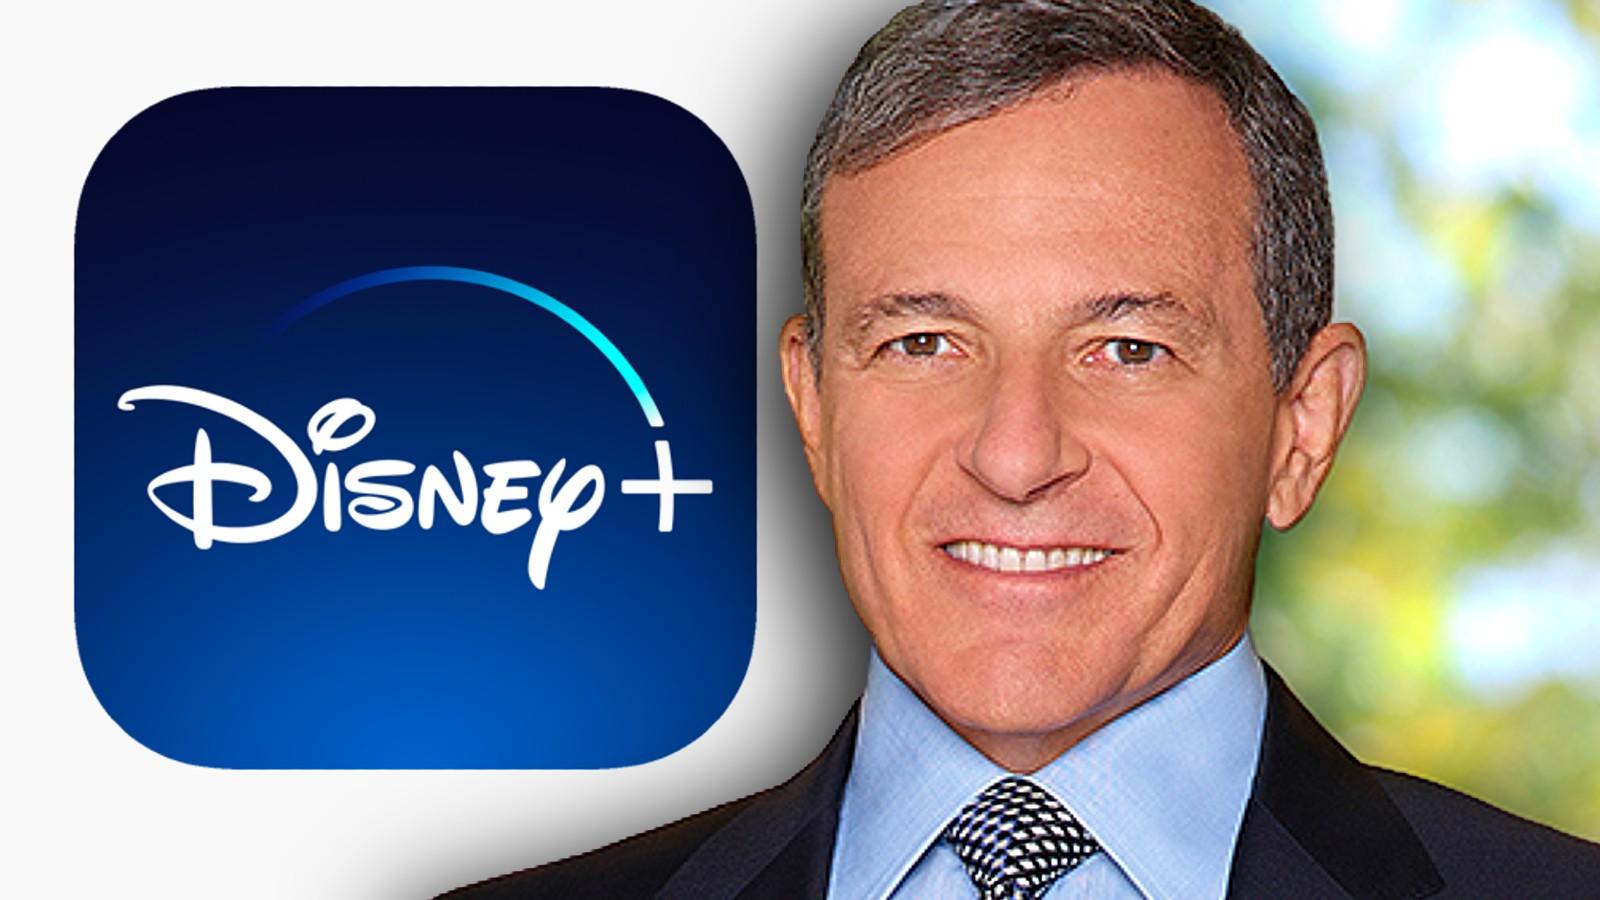 Bob Iger and the Disney Plus logo